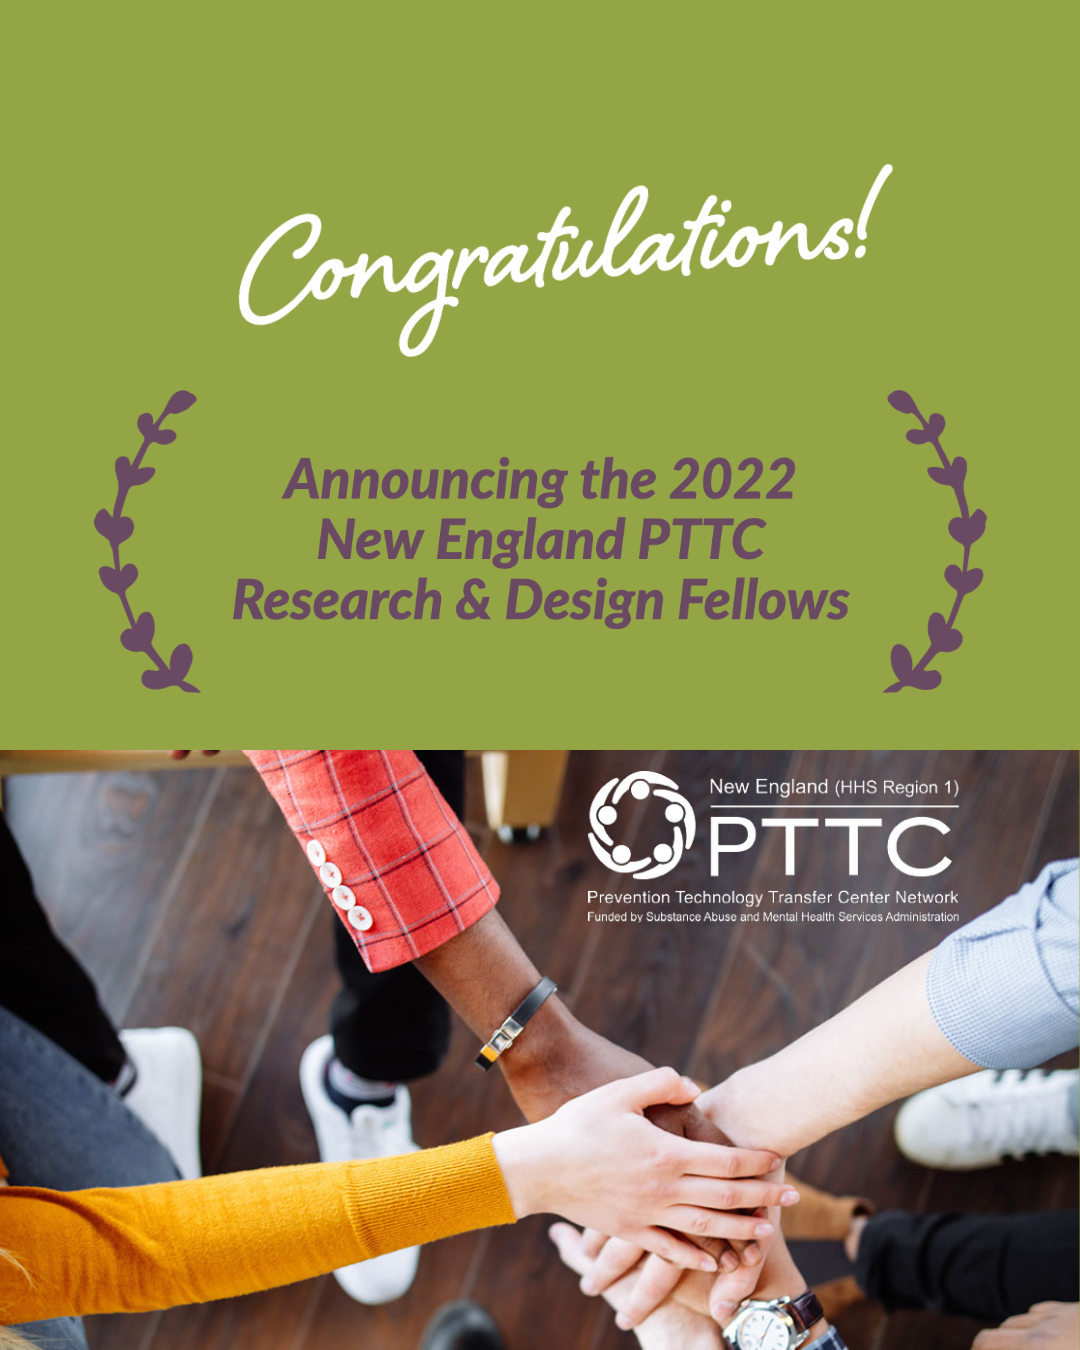 Research & Design Fellows Announcement 2022